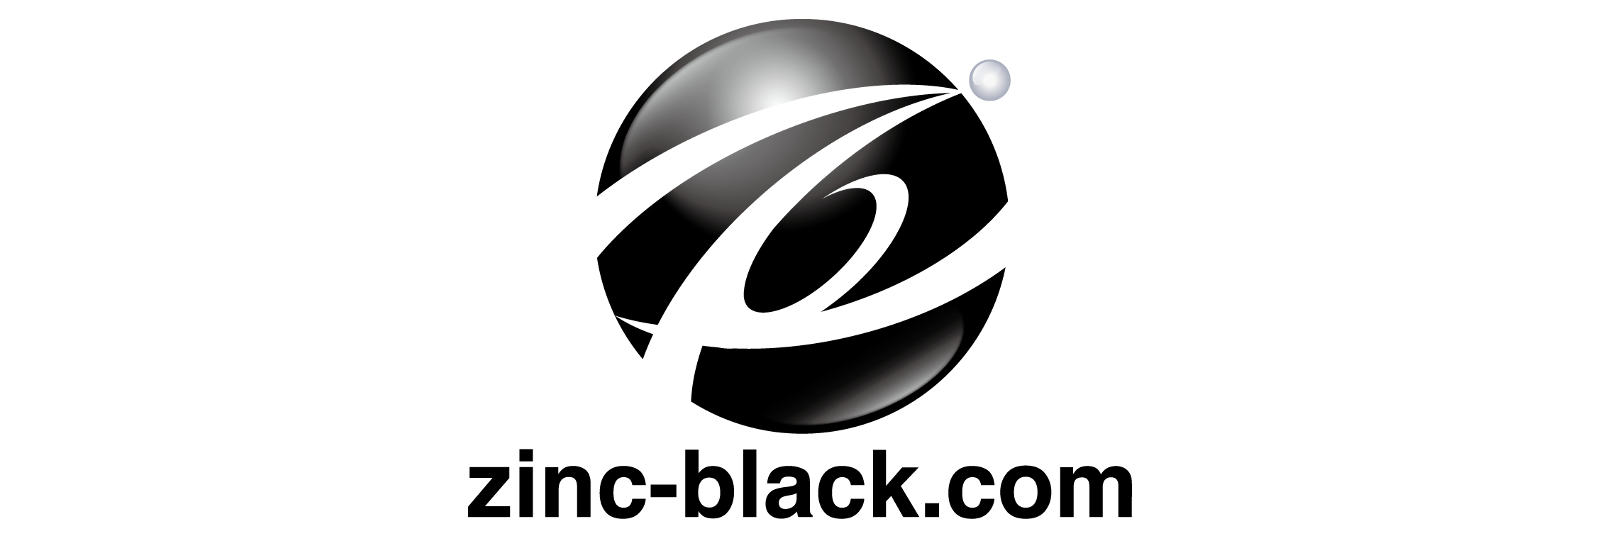 zinc-black_sliderlogo